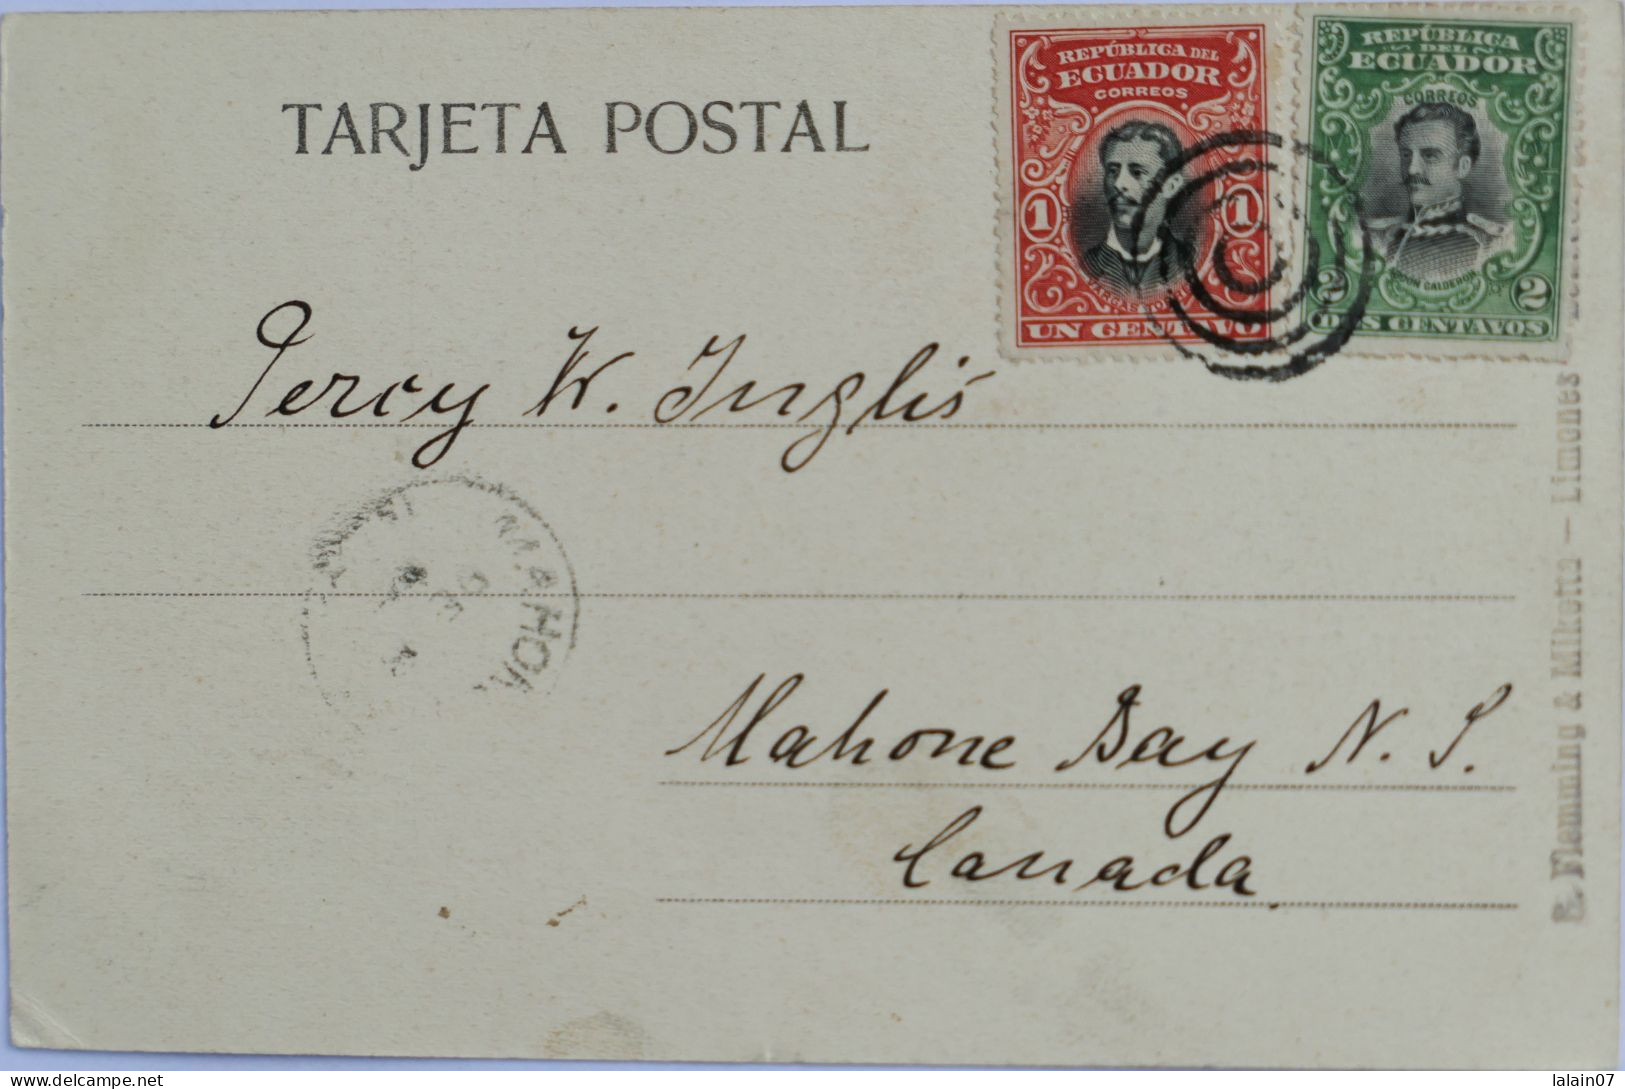 C. P. A. : ECUADOR : EQUATEUR : Puerto Vargos (Vargas) Torres, Vista De Limones, Stamp In 1906 - Equateur